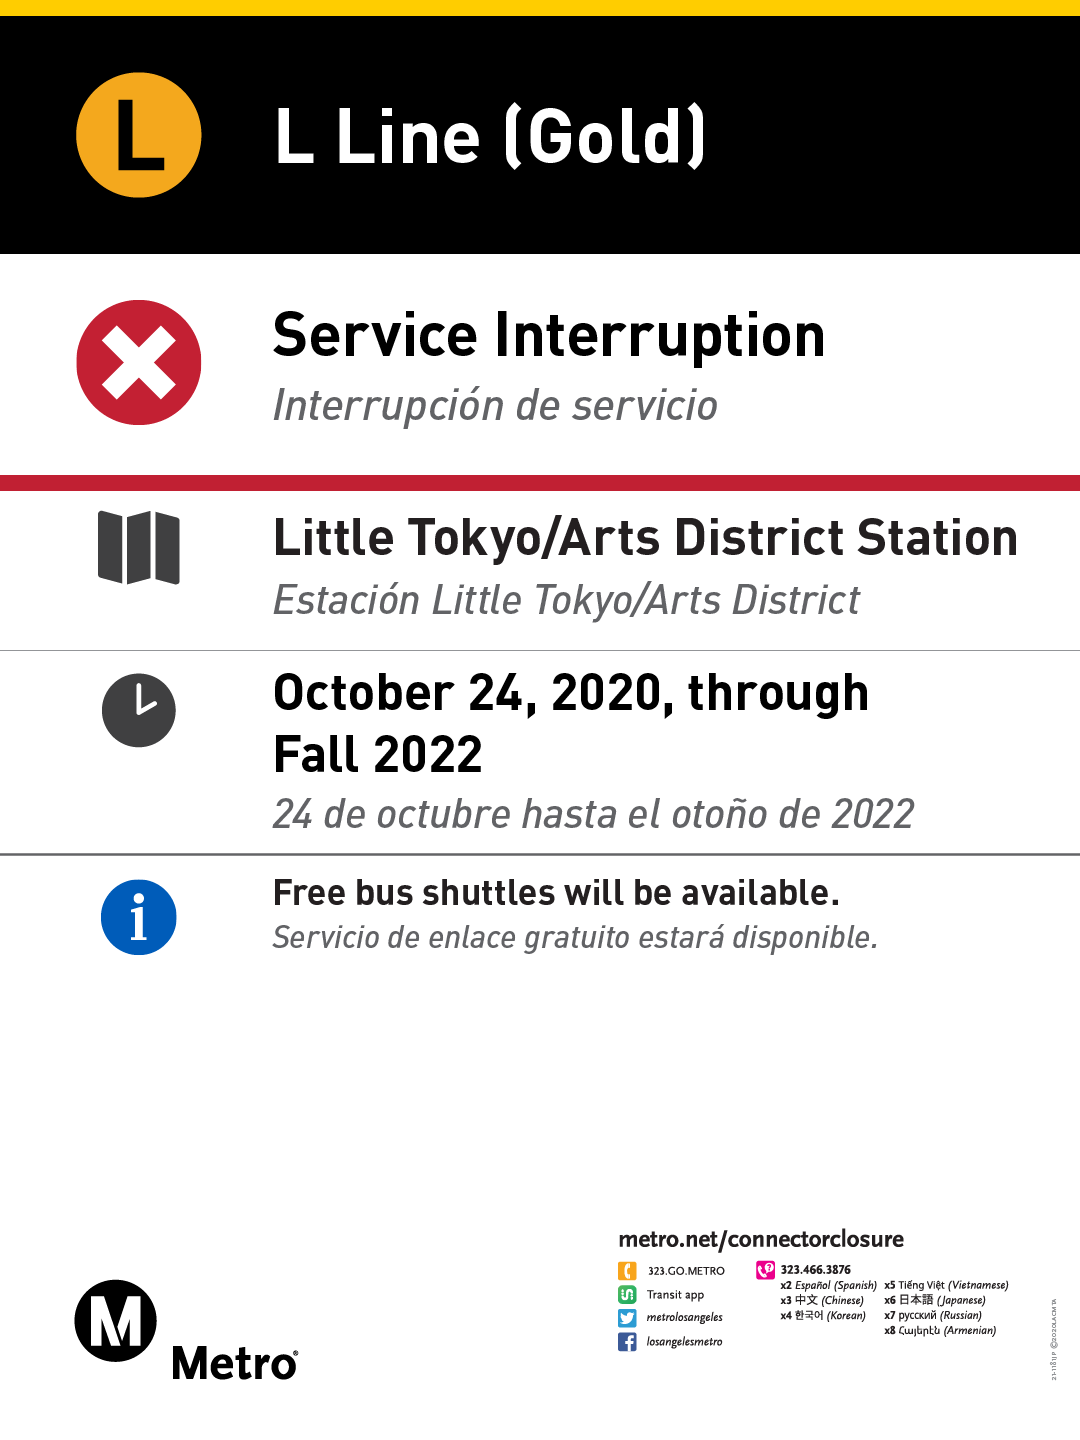 L Line (Gold) Service Interruption notice.